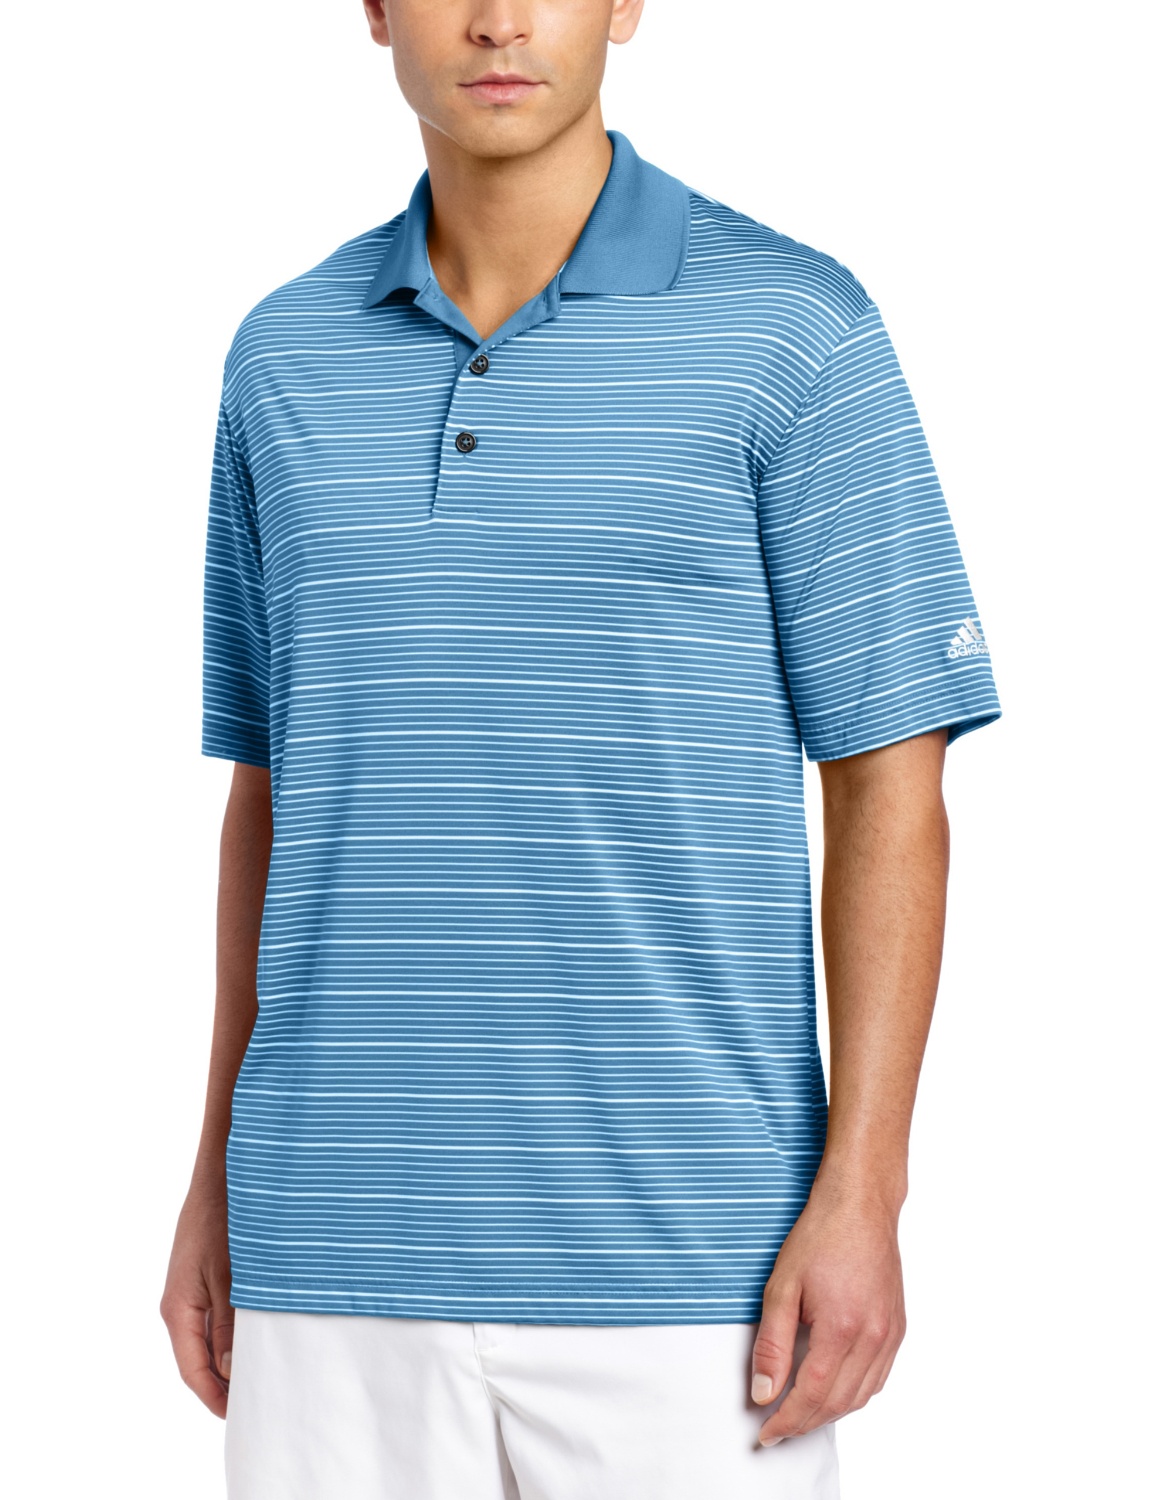 adidas climalite golf shirt